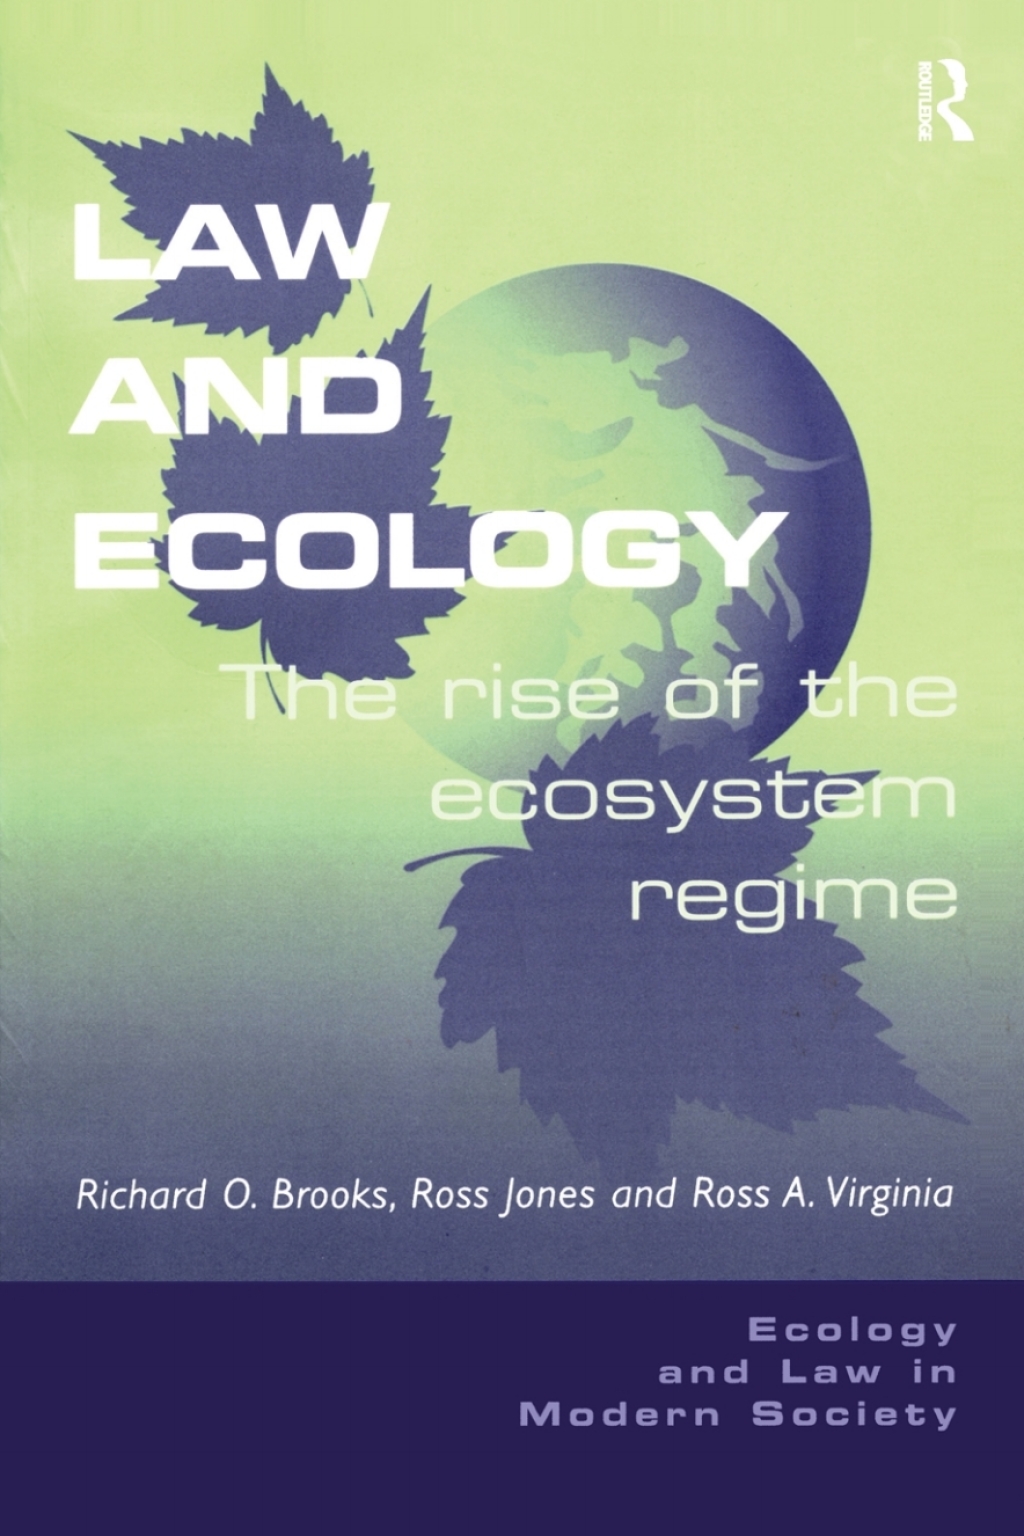 Law and Ecology (eBook) - Richard O. Brooks; Ross Jones